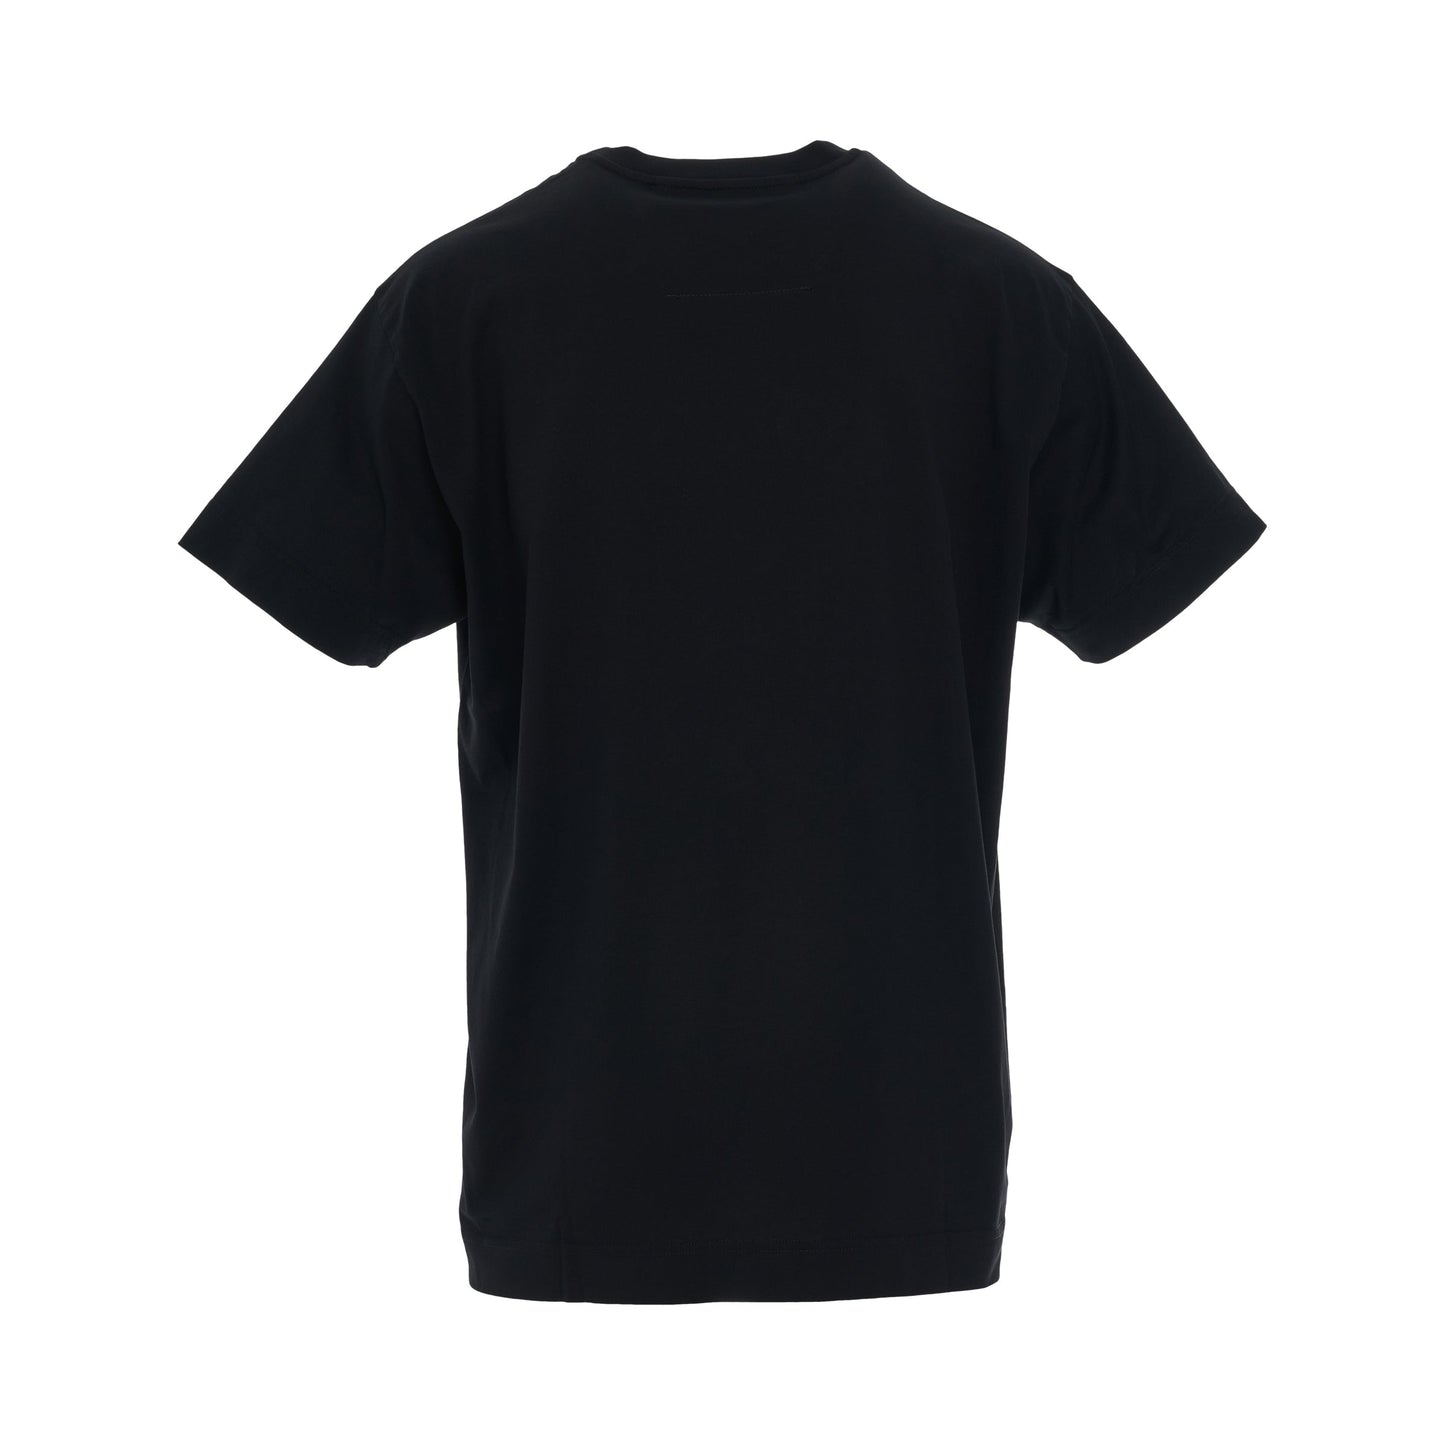 MMW Crest Oversized T-Shirt in Black